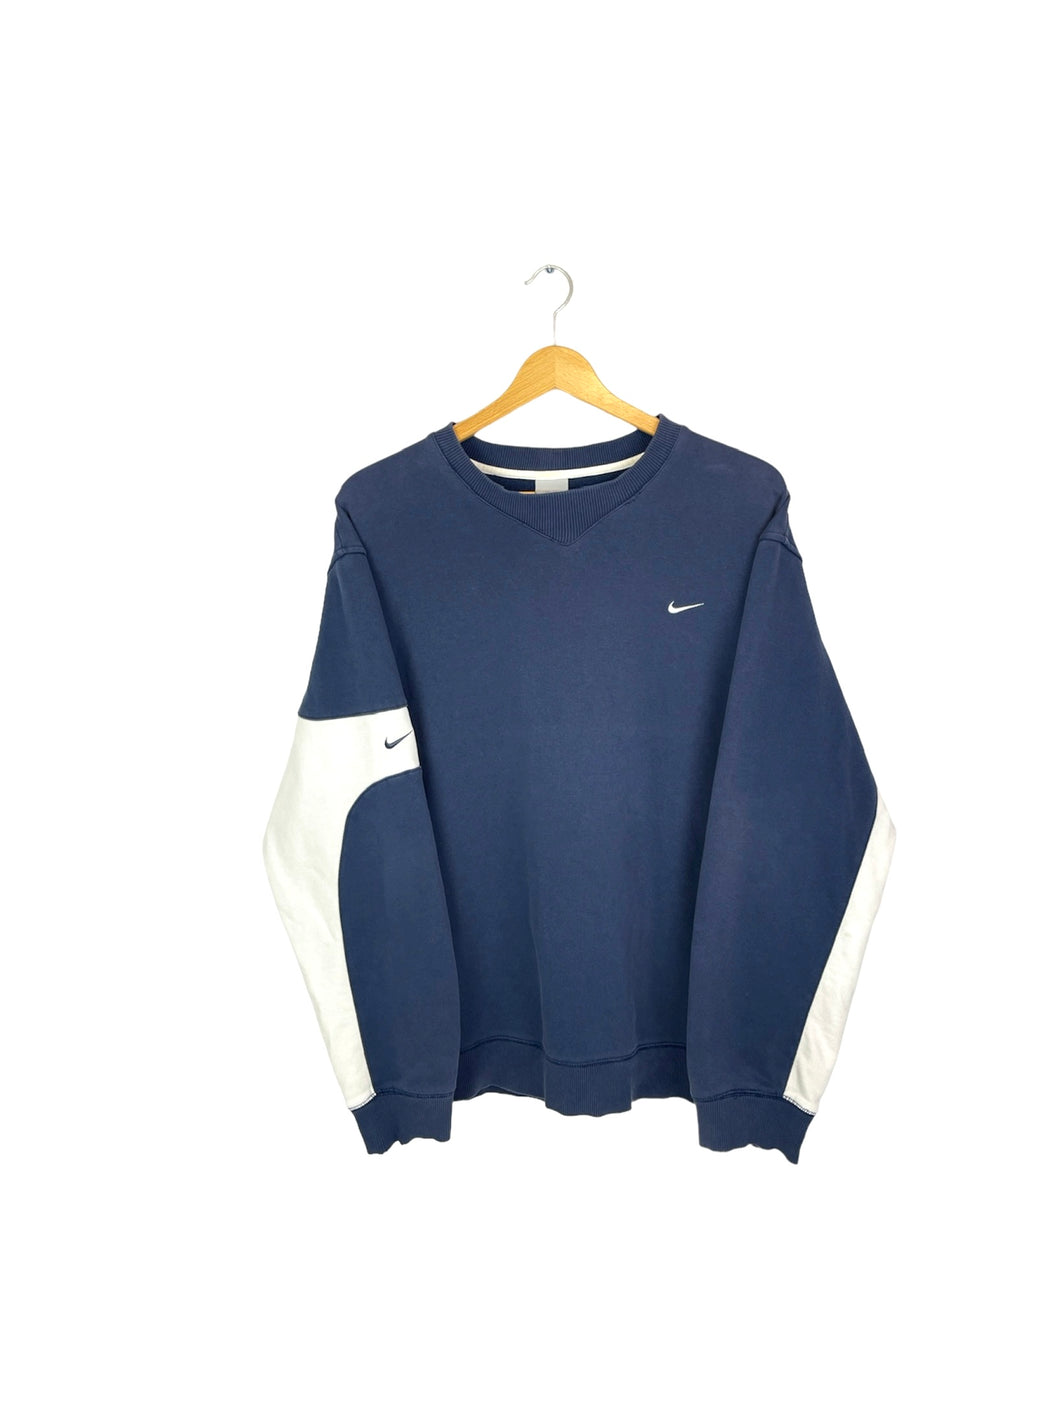 Nike Sweatshirt - Large